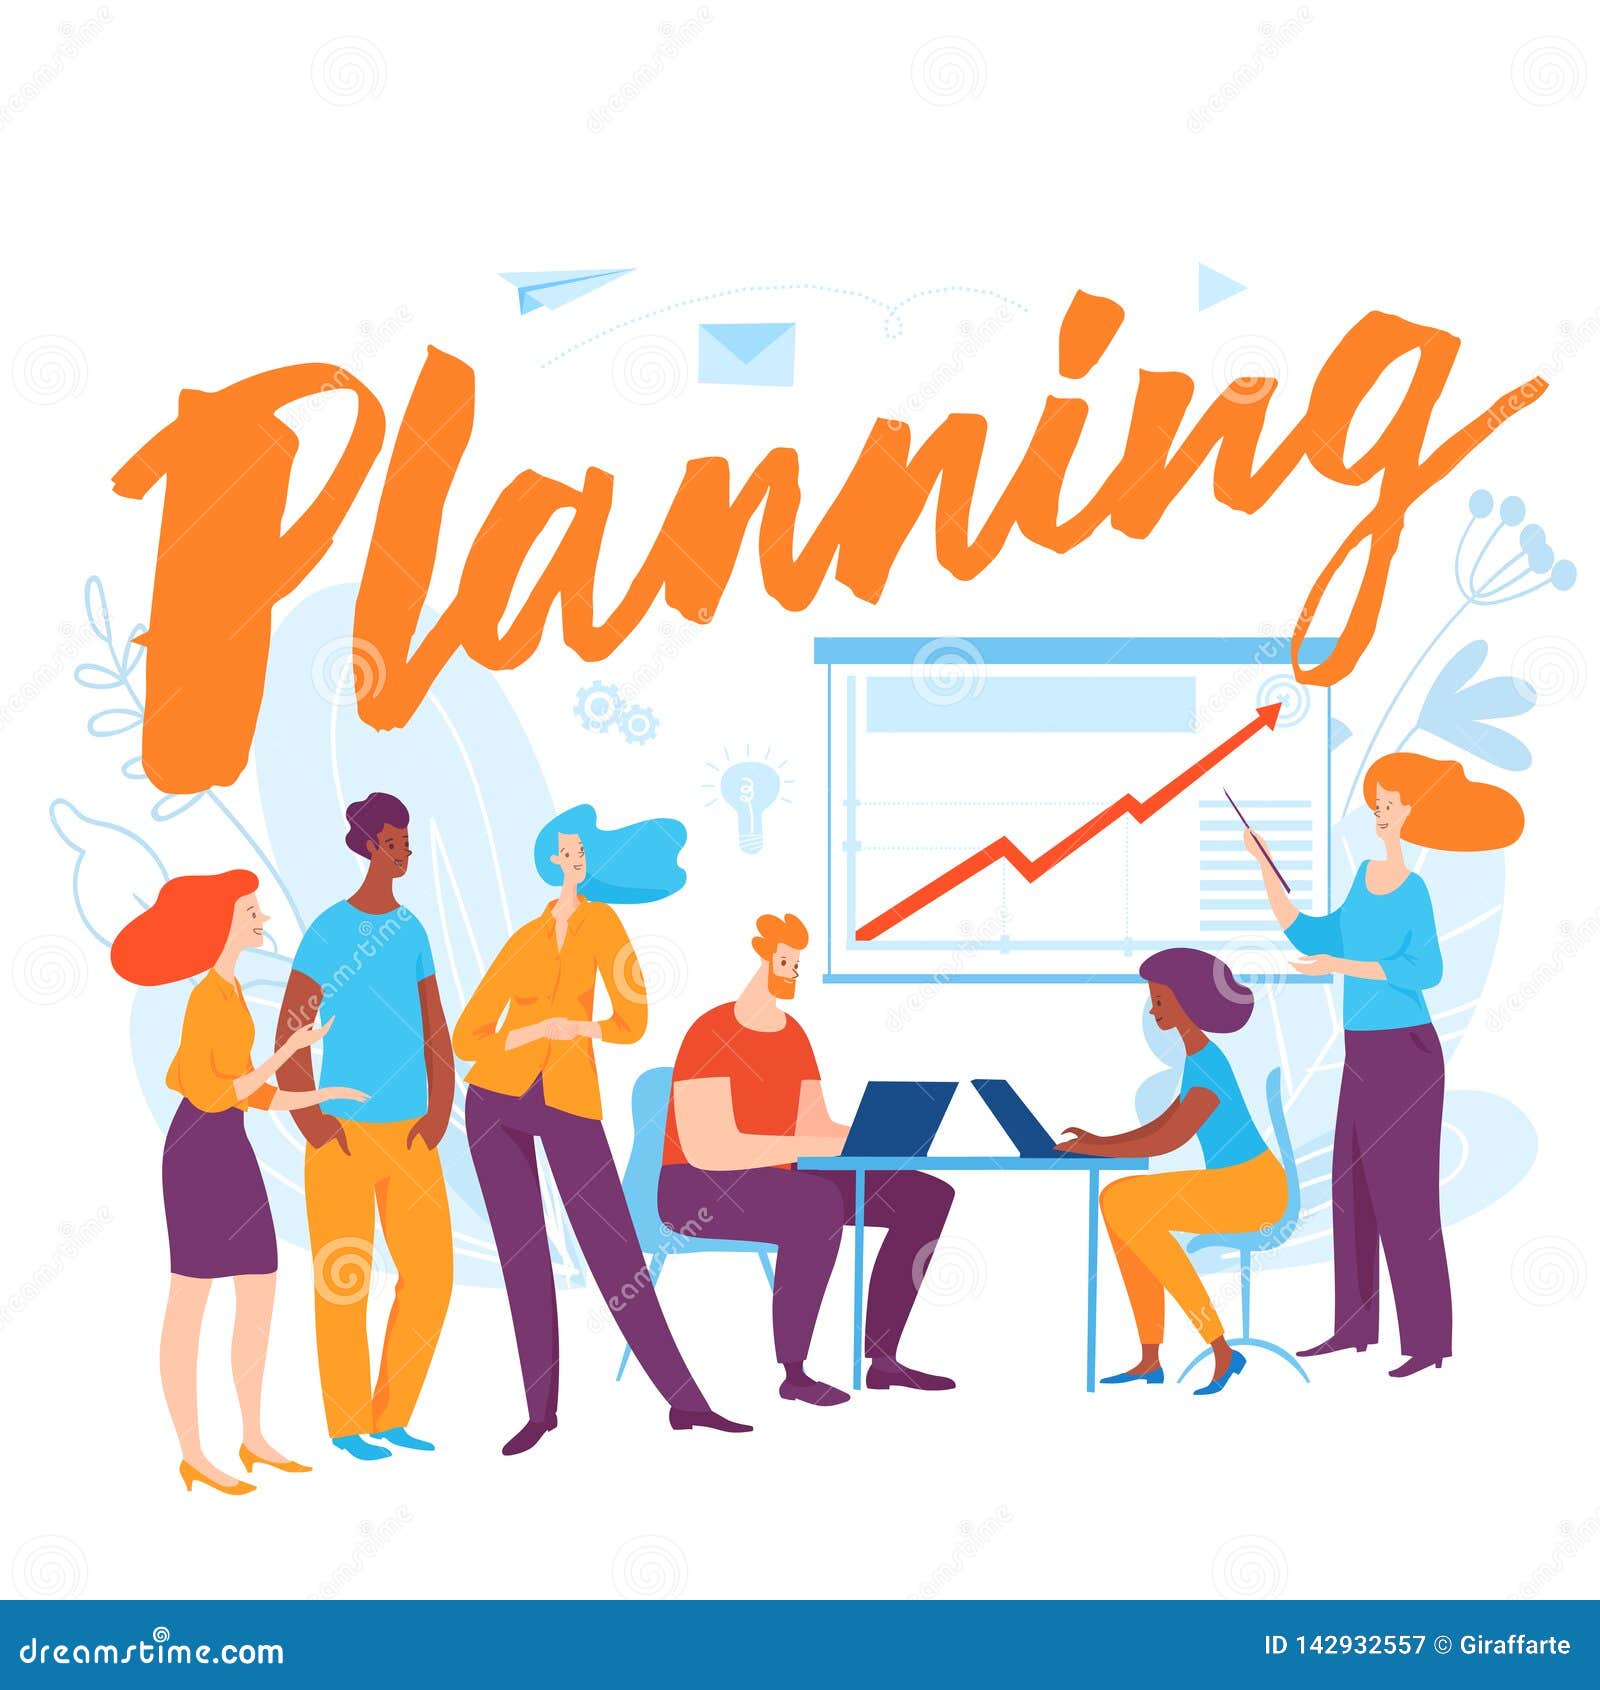 business planning clip art